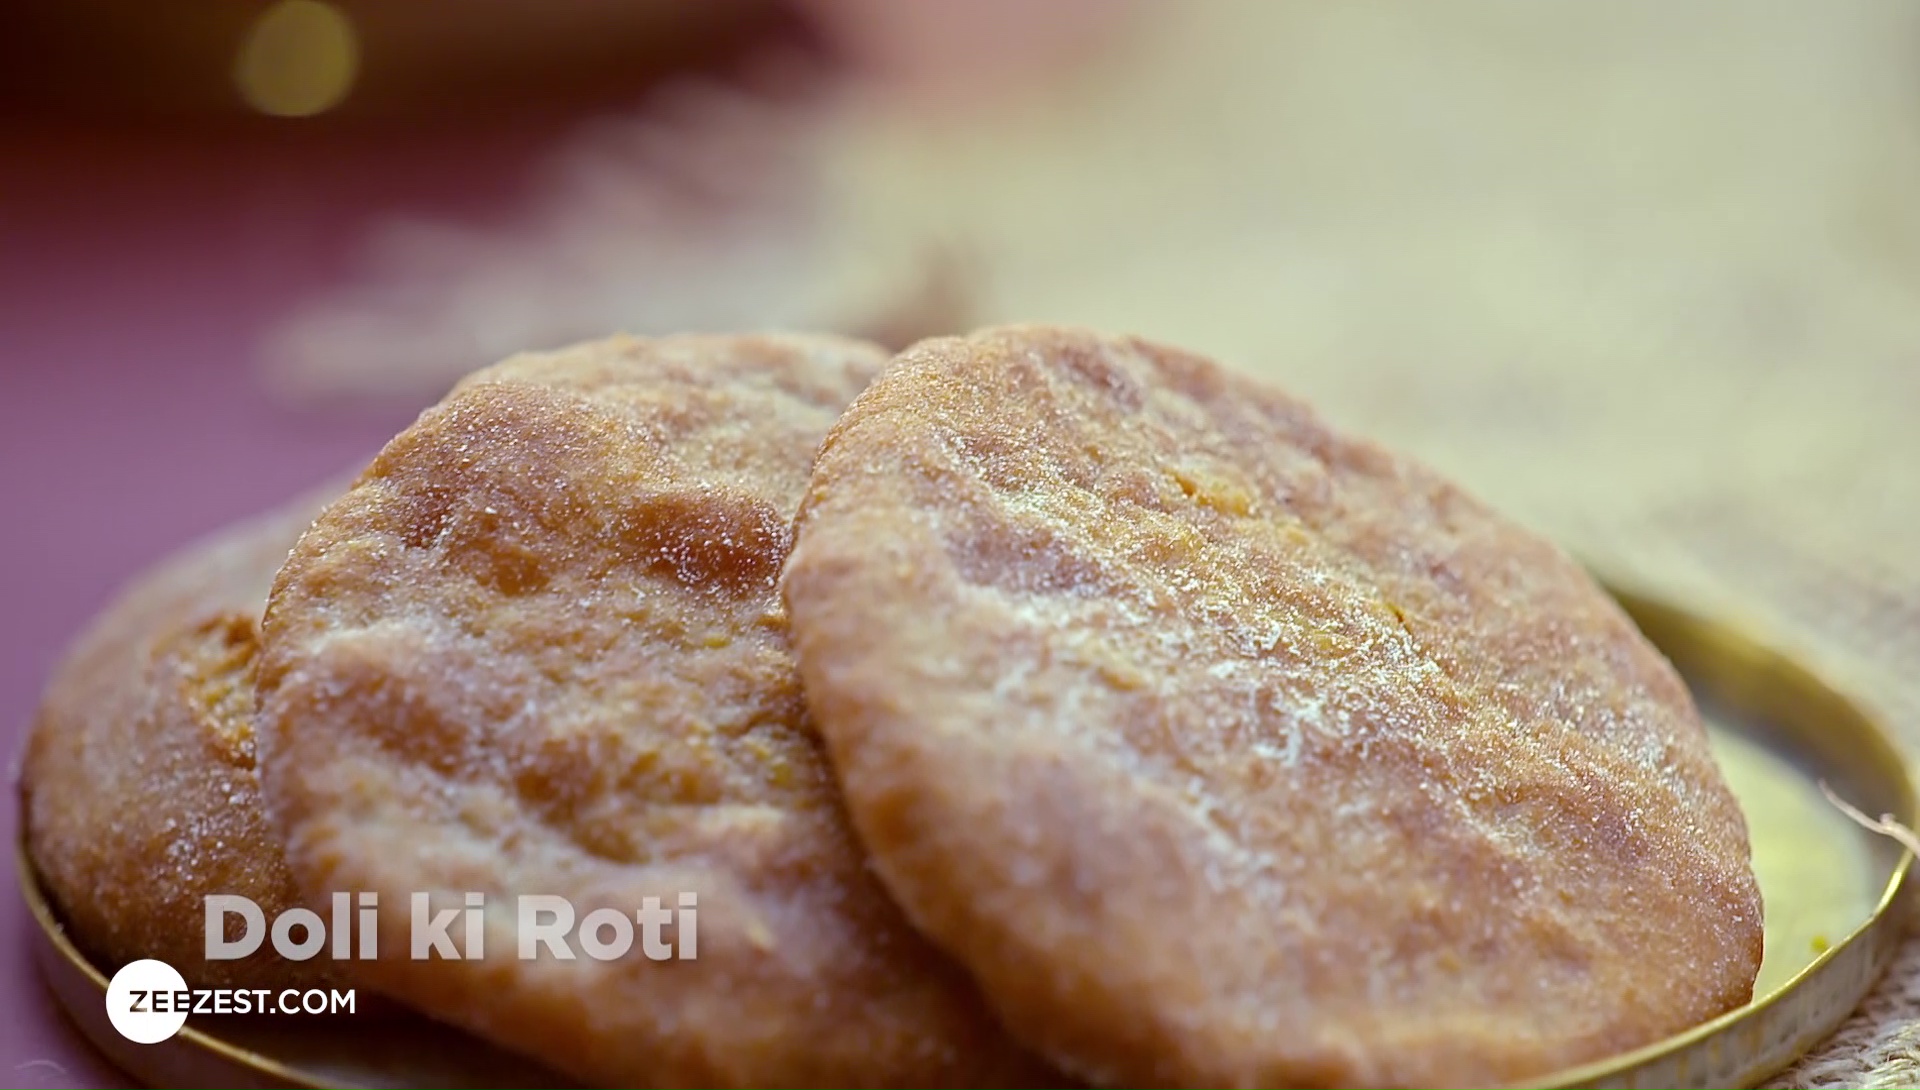 Indian Food Classics, Pankaj Bhadouria